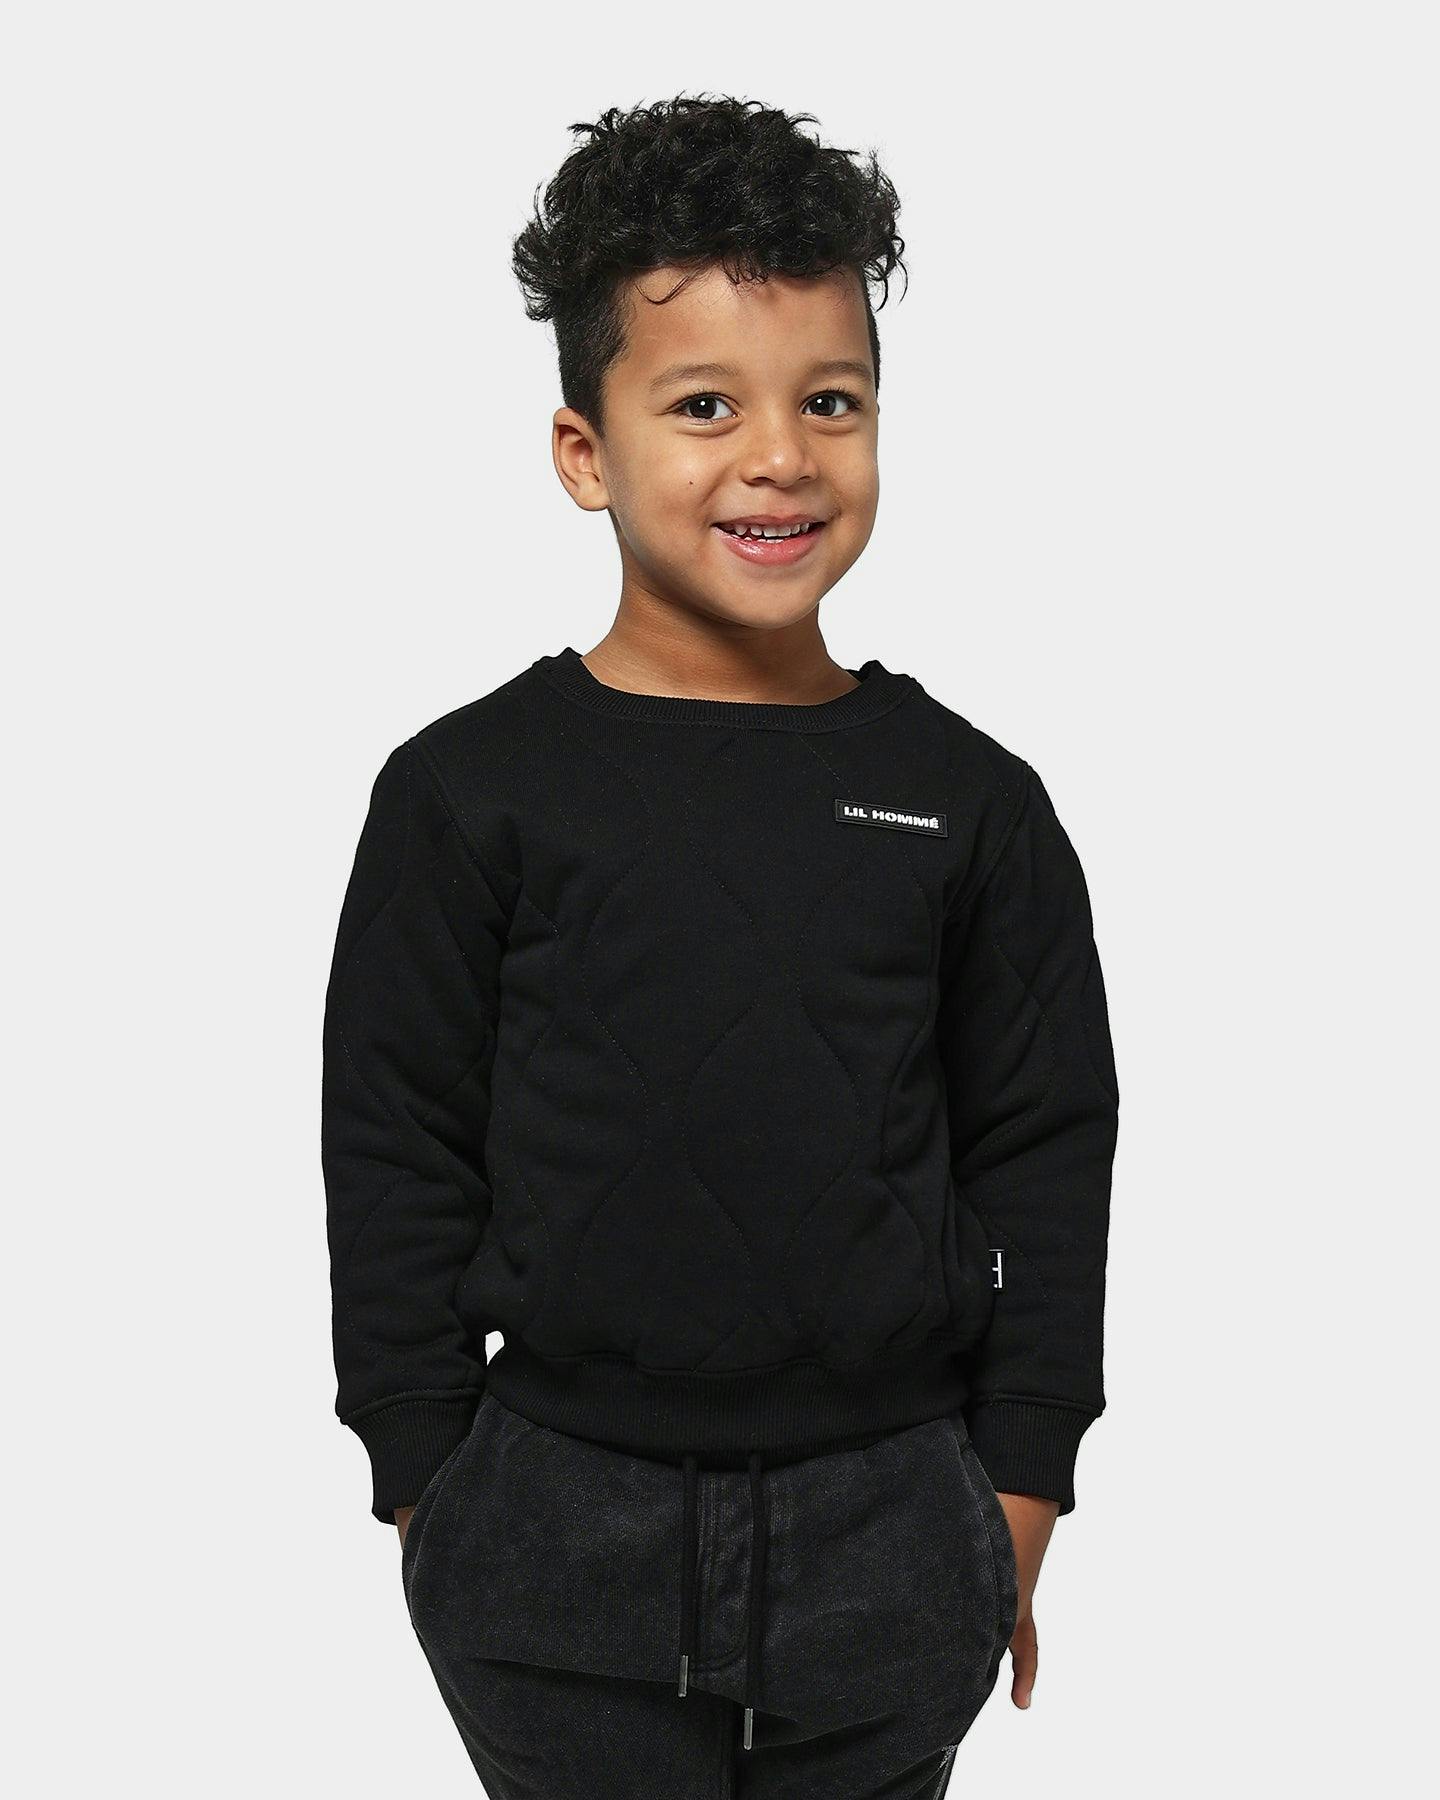 Lil Hommé Kids Roadman Quilted Sweater Black | Culture Kings